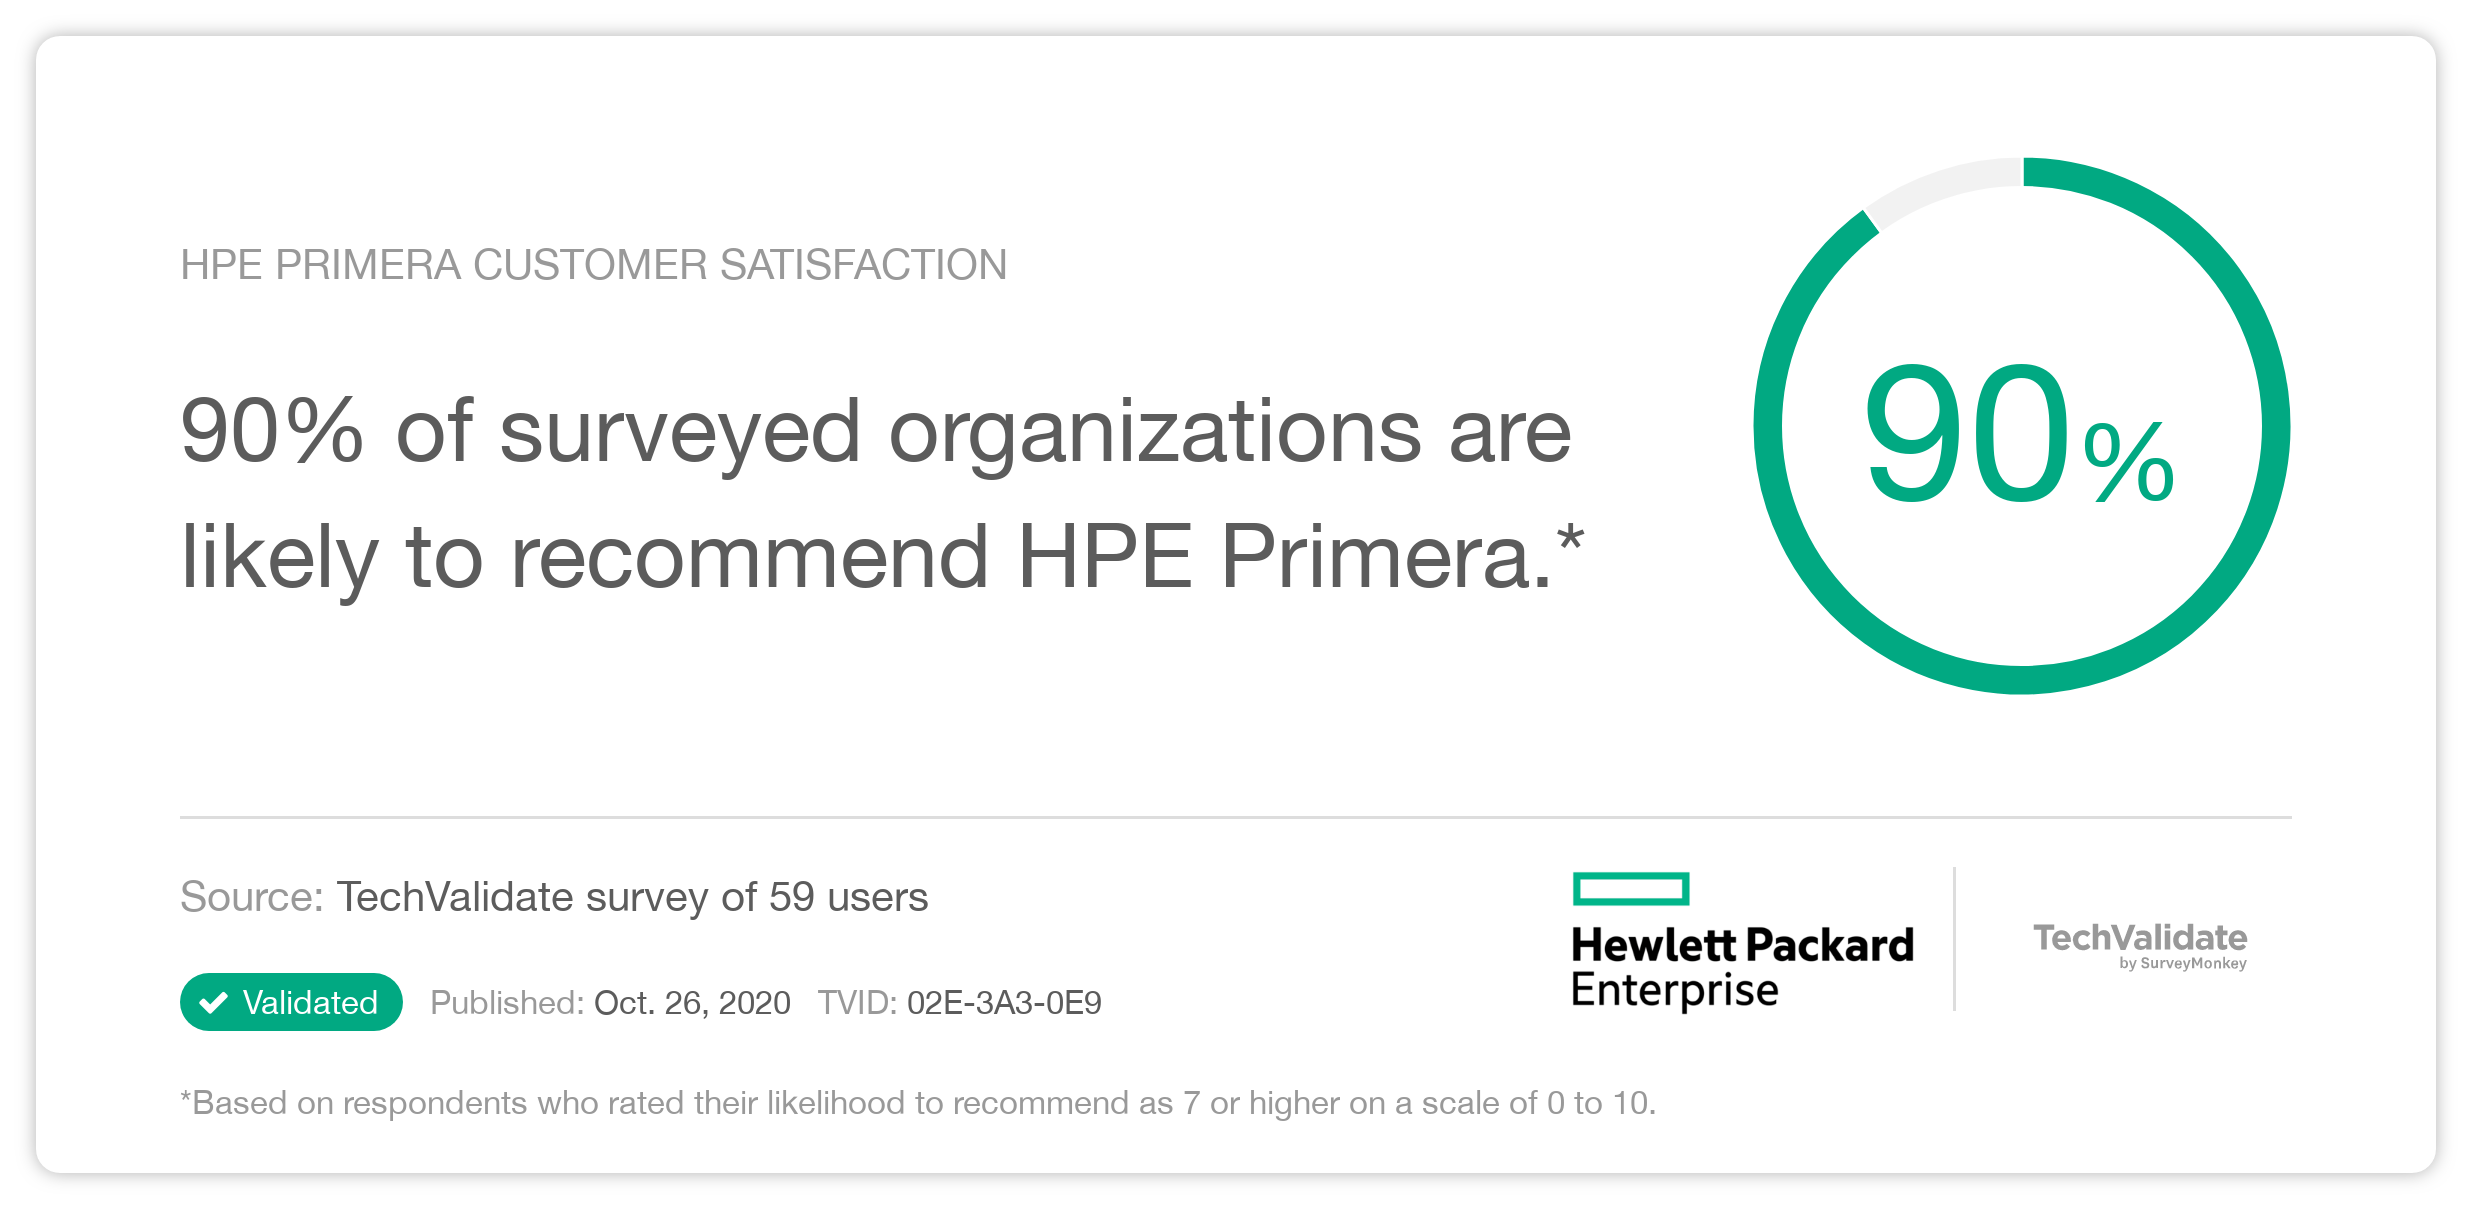 HPE Primera Customer Satisfaction